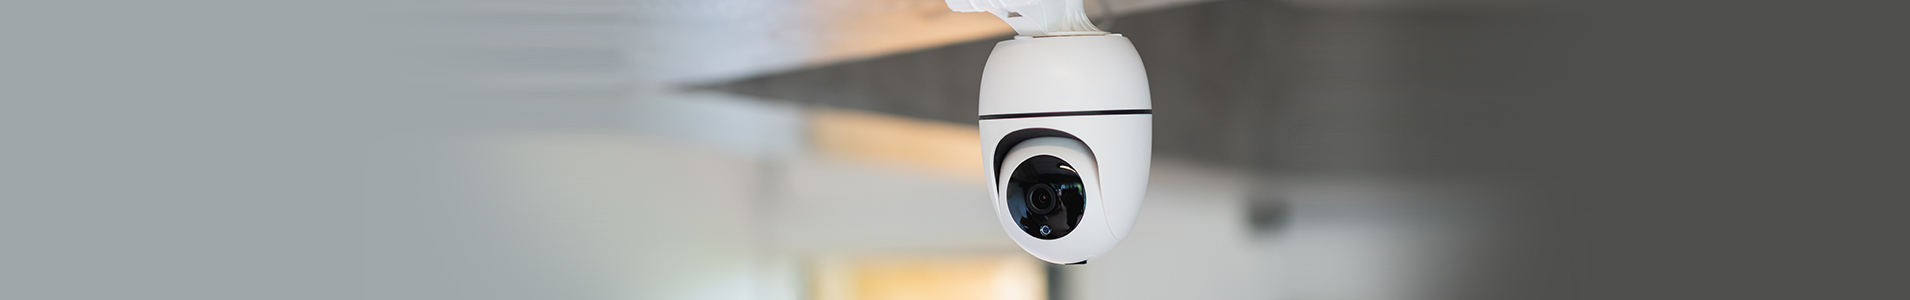 CCTV Cameras & Installation Service by Securitec Security in Joondalup